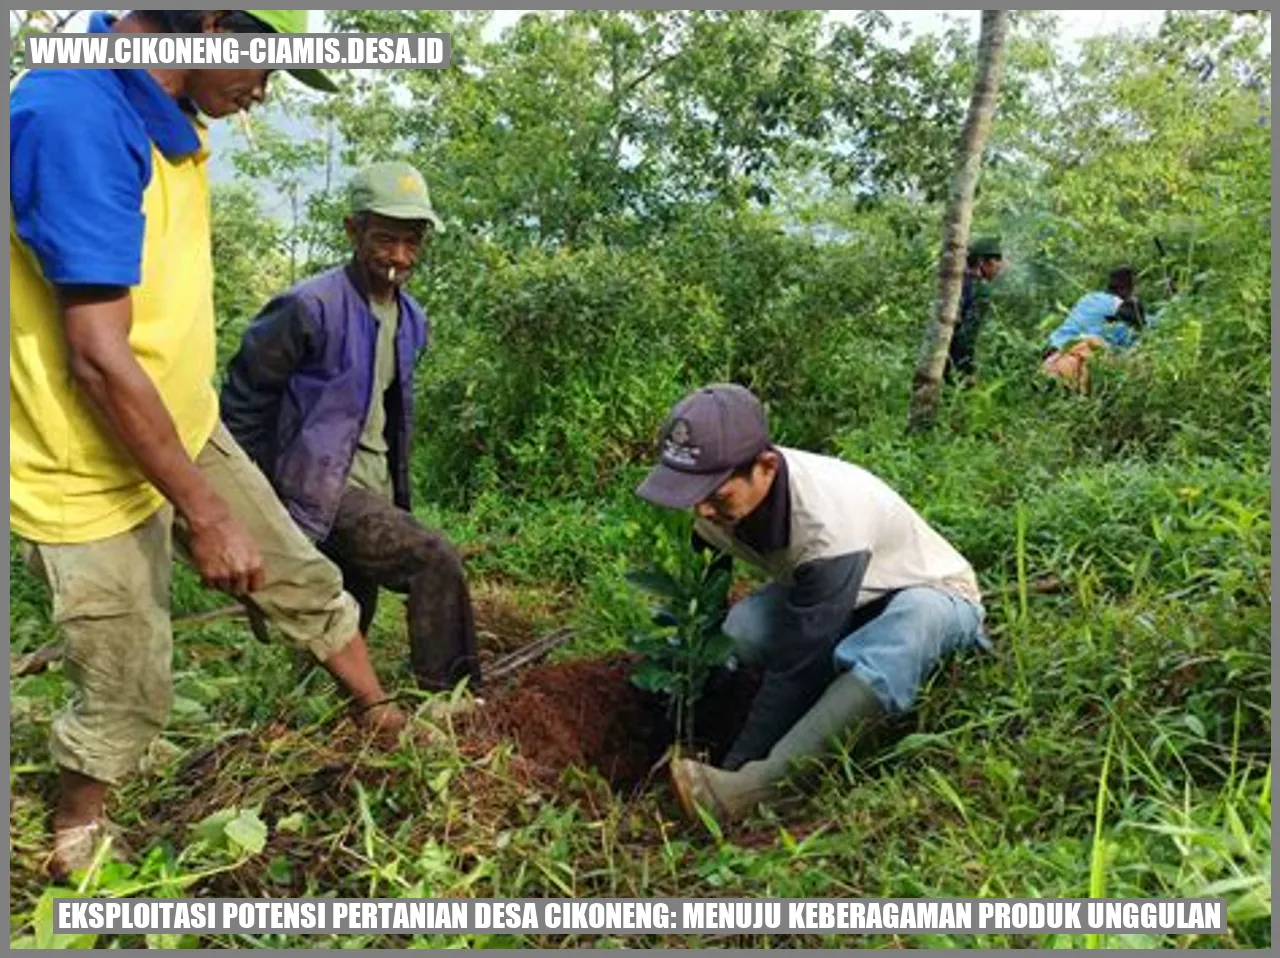 Eksploitasi Potensi Pertanian Desa Cikoneng: Menuju Keberagaman Produk Unggulan